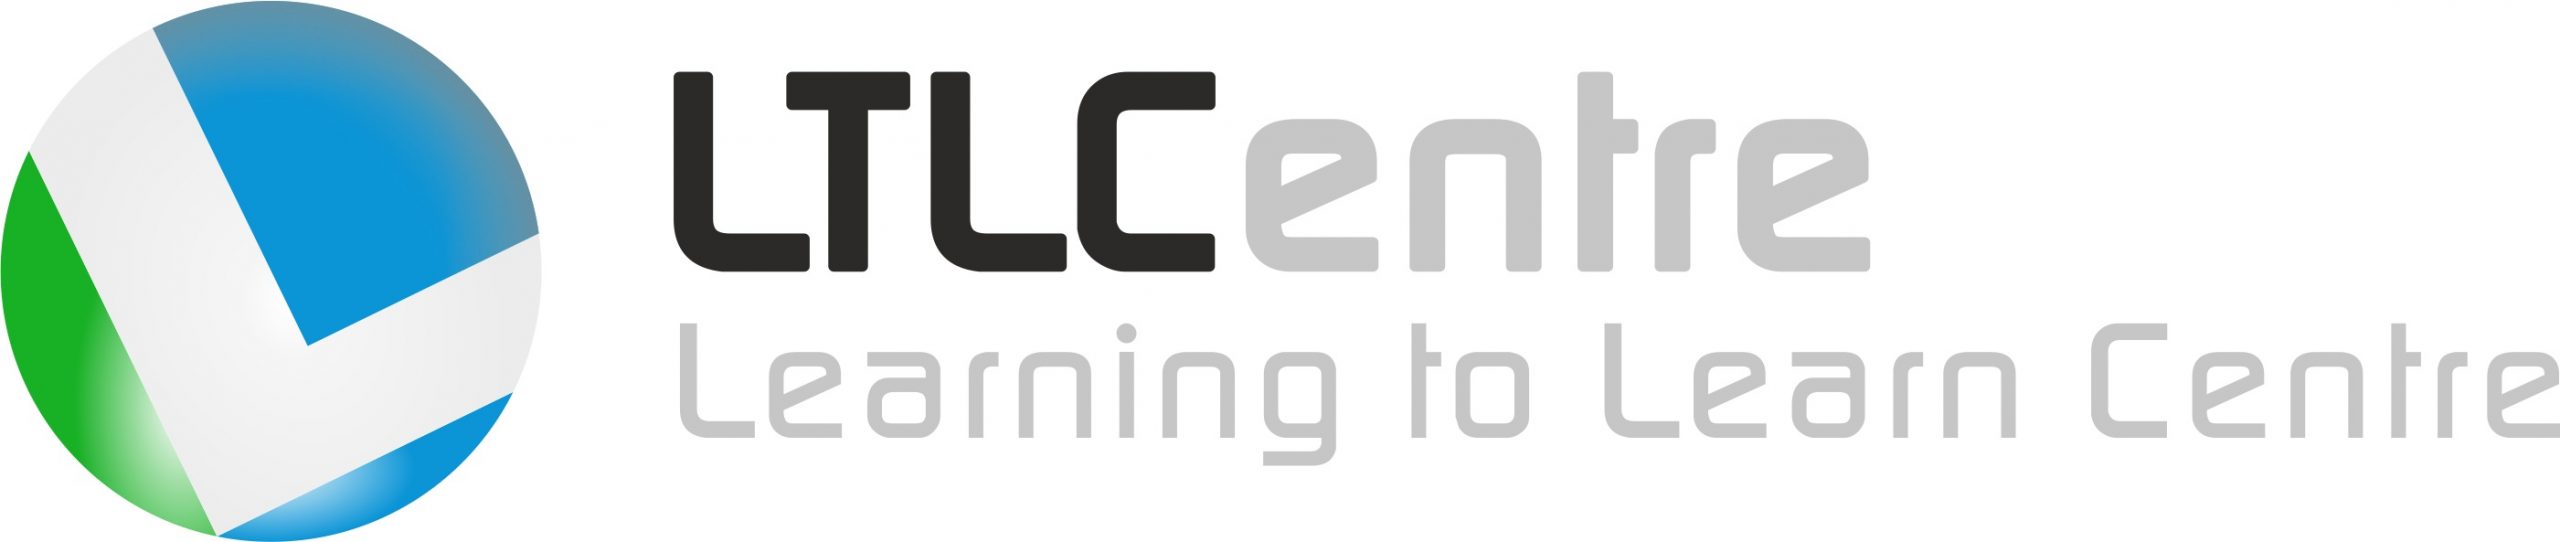 logo-ltlc